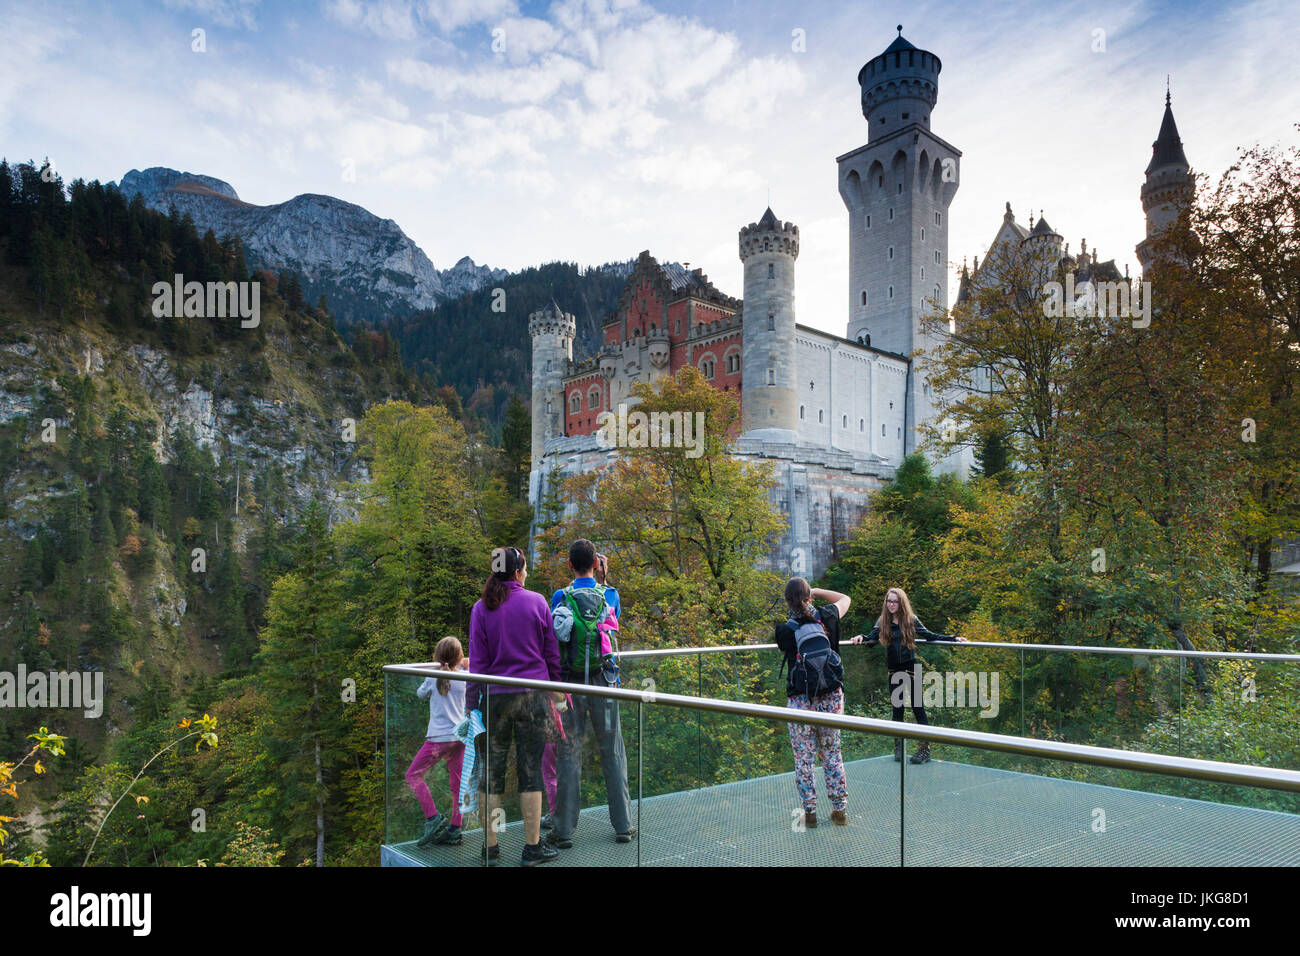 Germany, Bavaria, Hohenschwangau, Schloss Neuschwanstein castle, tourists at observation platform Stock Photo